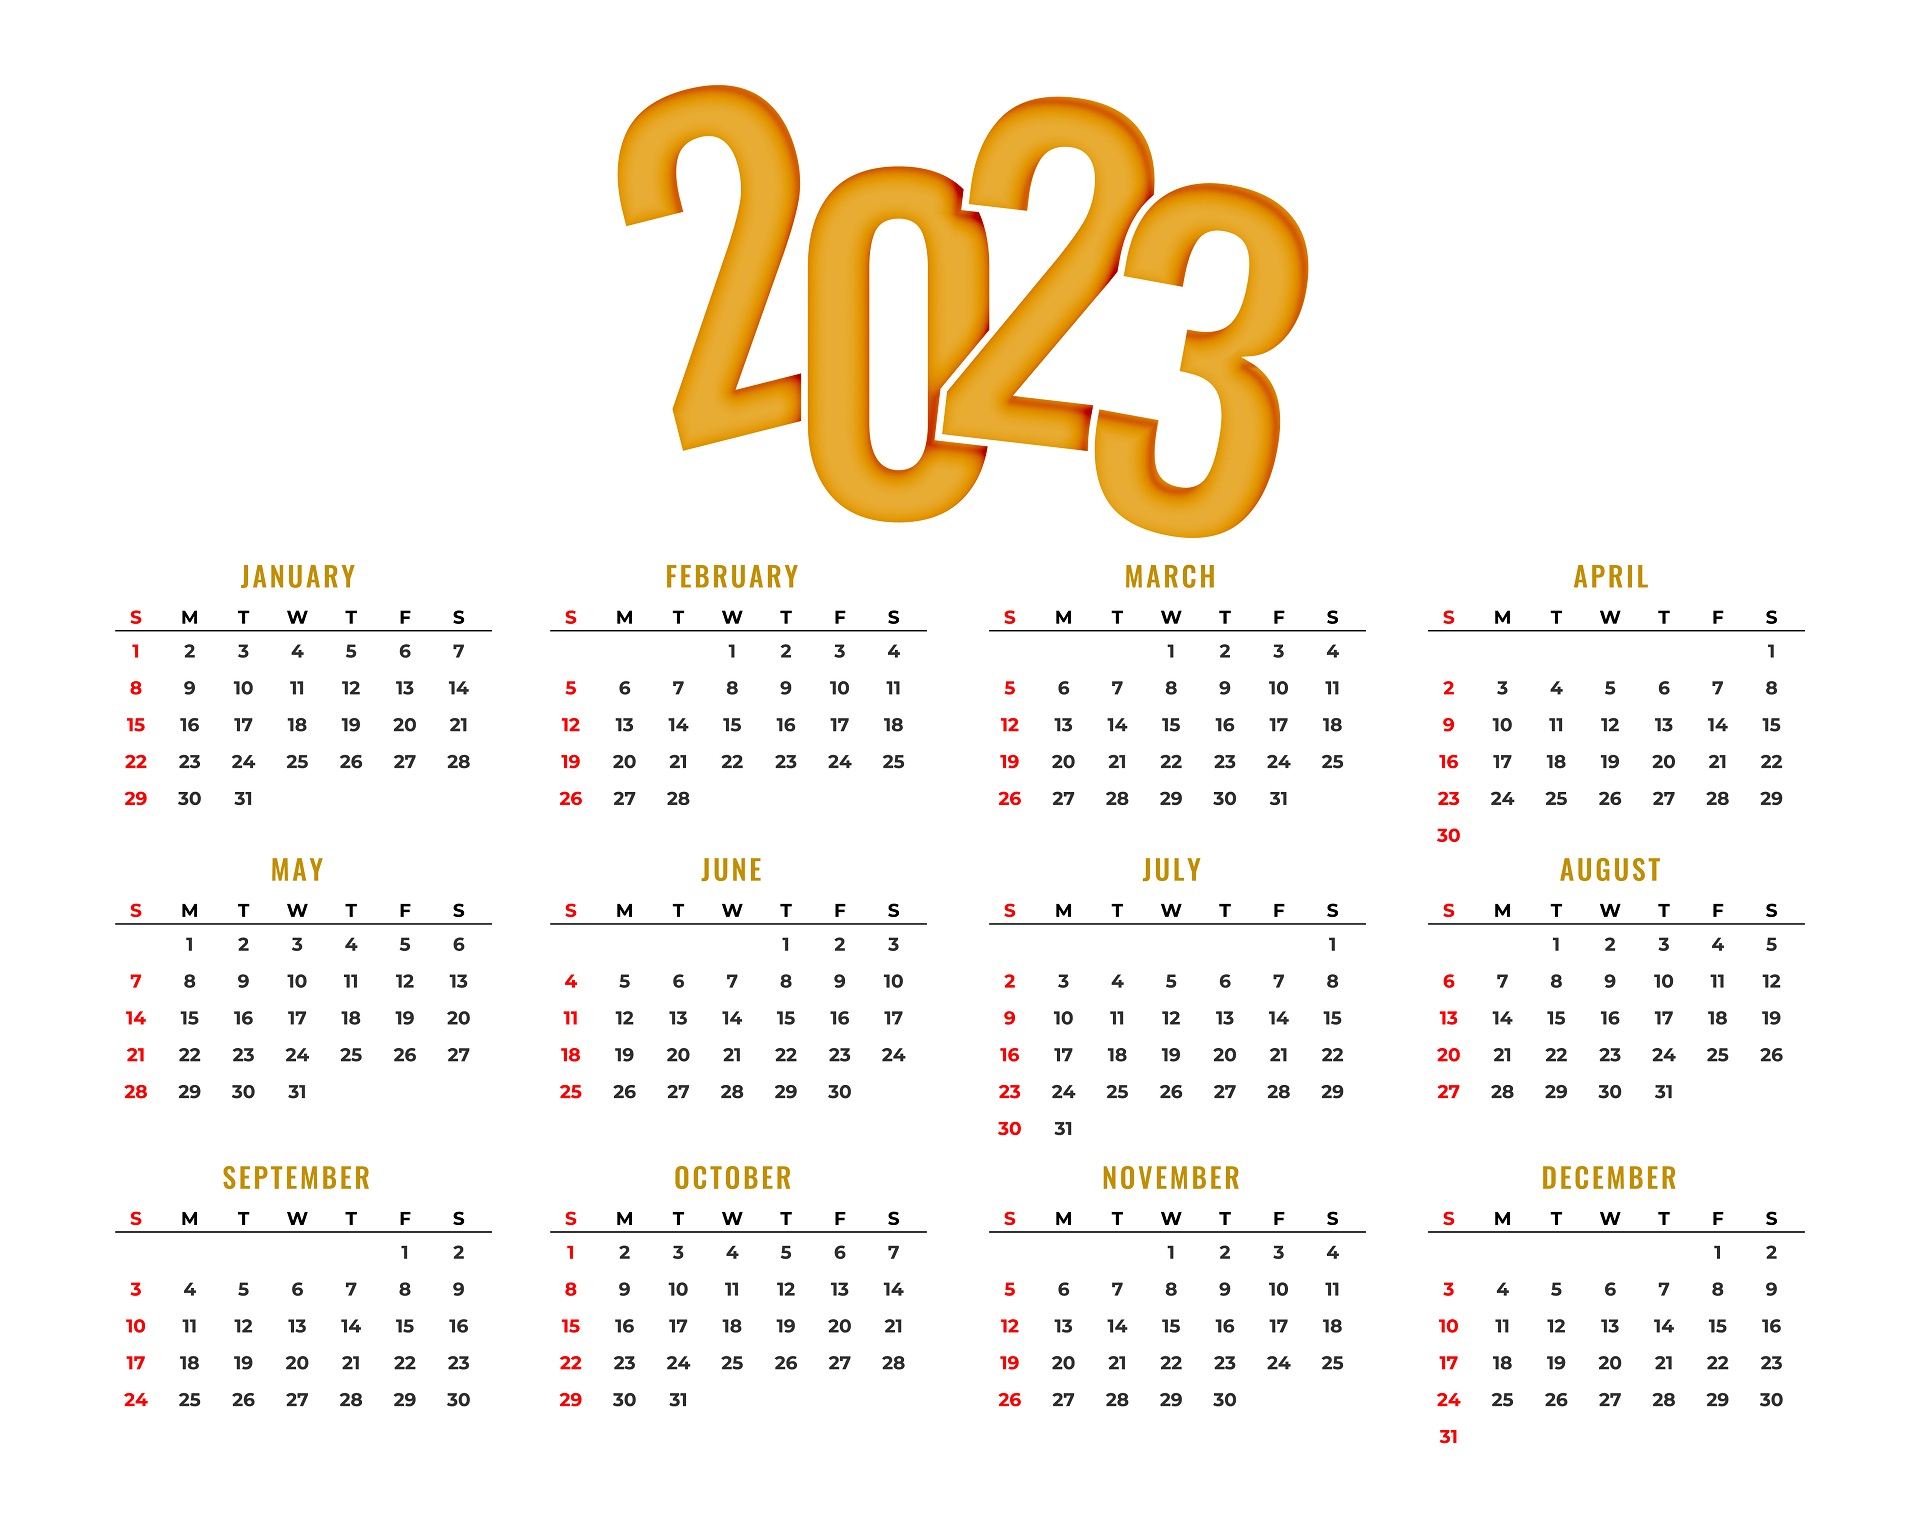 free printable calendar 2023